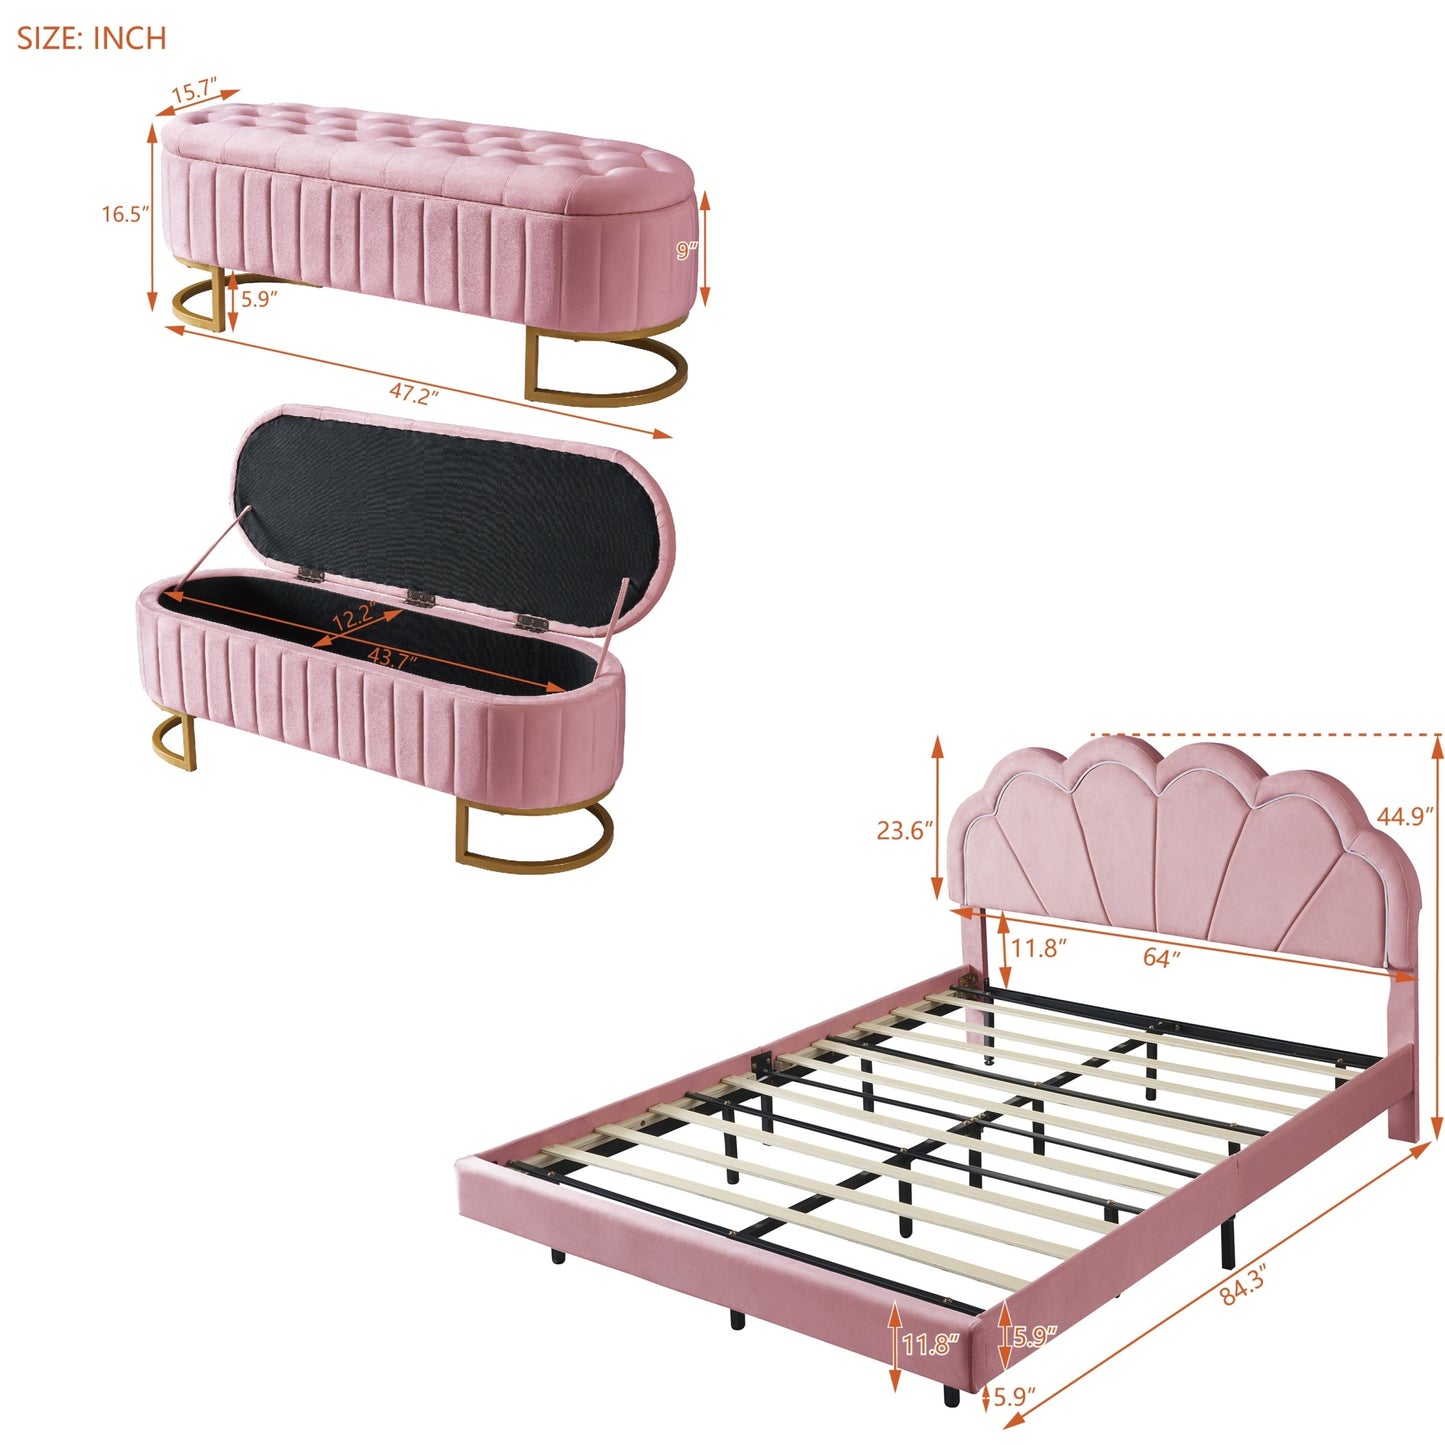 2-pieces upholstered led platform bed with storage ottoman-velvet